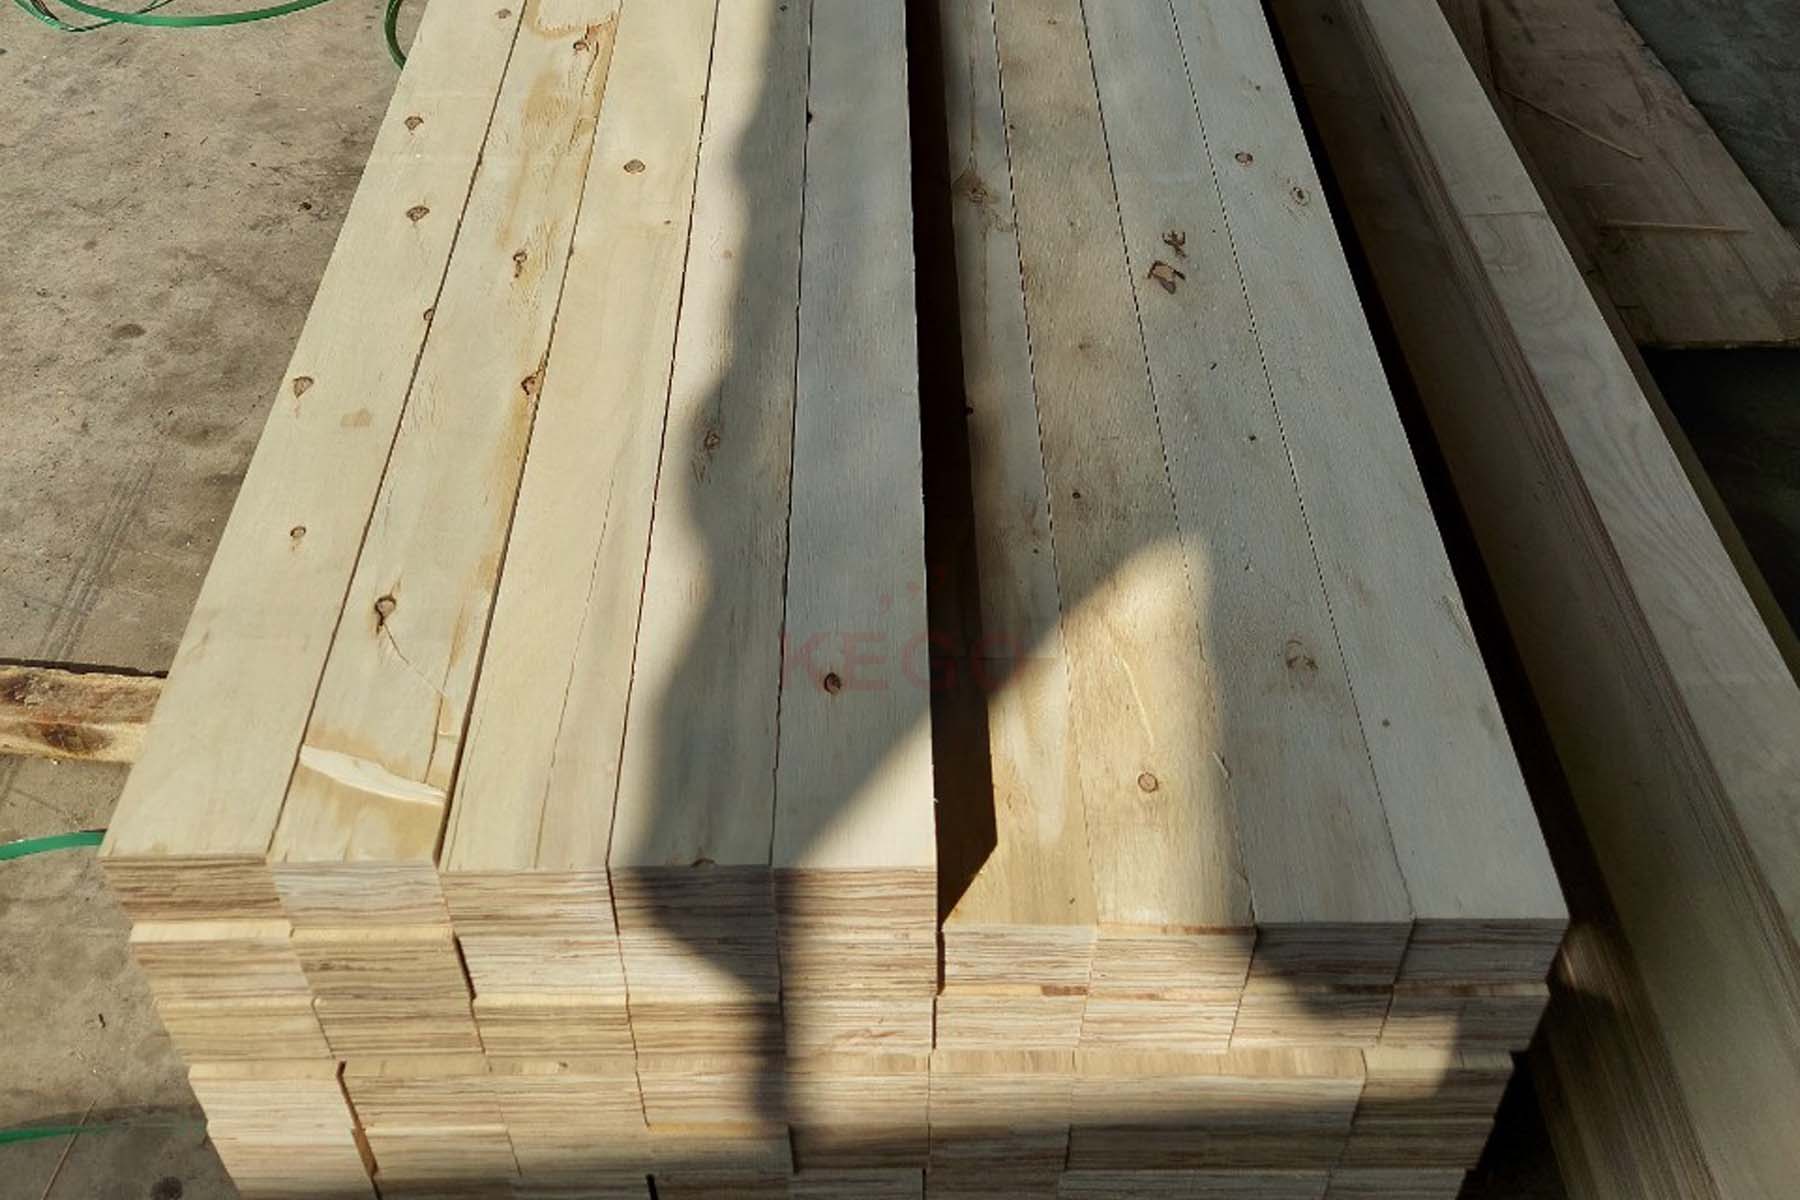 https://kego.com.vn/wp-content/uploads/2015/09/laminated-veneer-lumber-lvl-kego-14.jpg